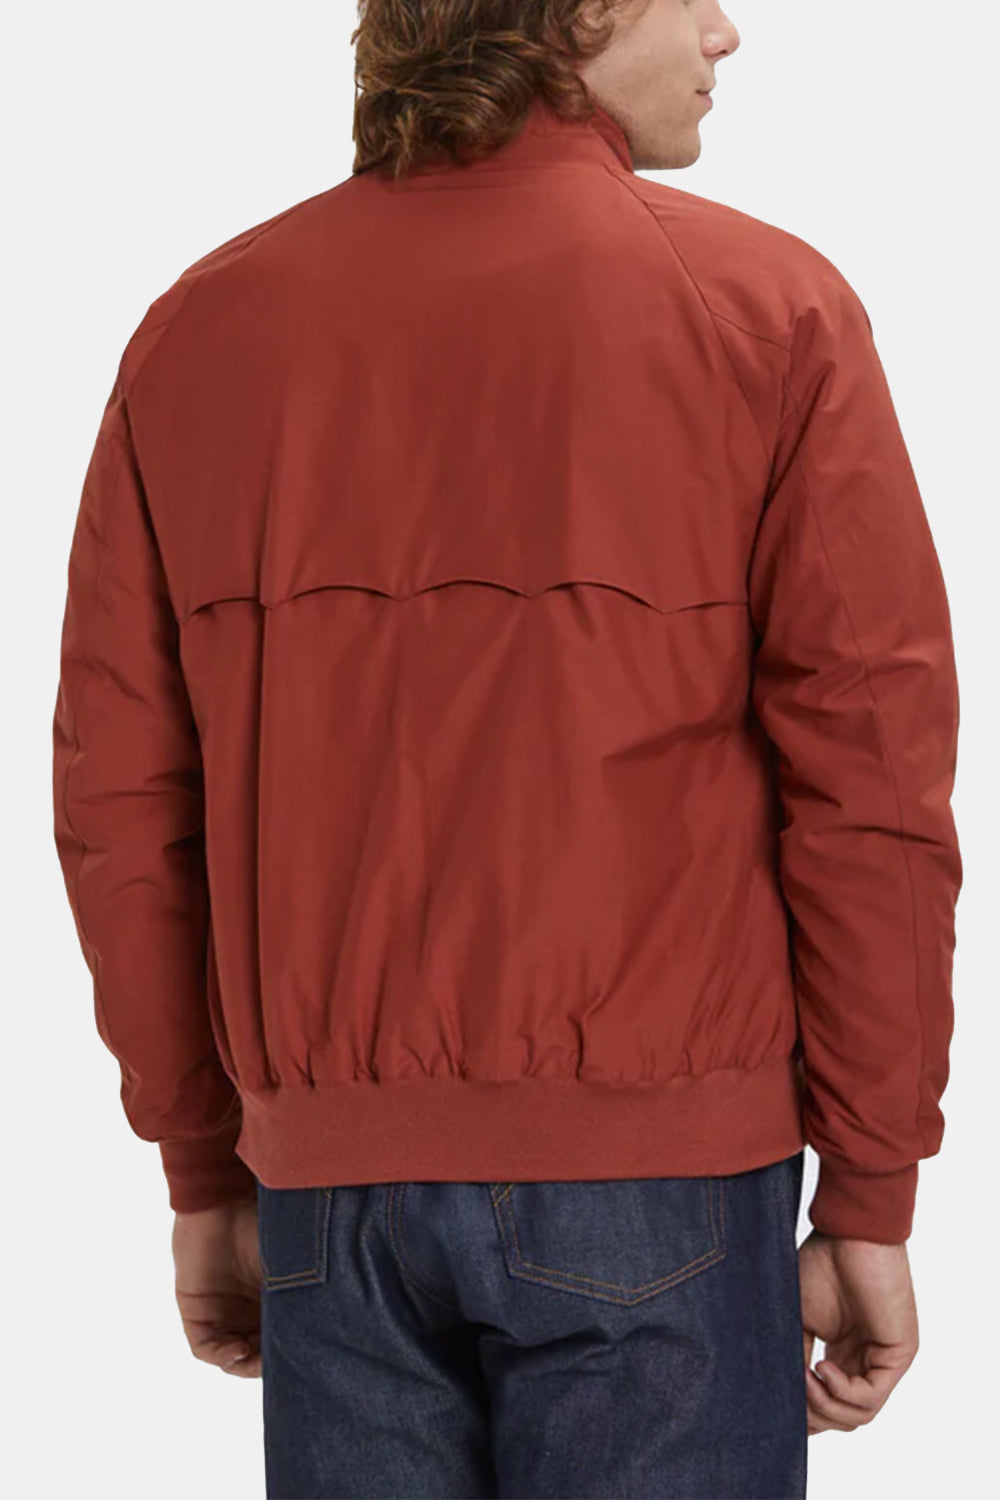 Baracuta G9 Classic Cotton-Blend Harrington Jacket (Brick Red)